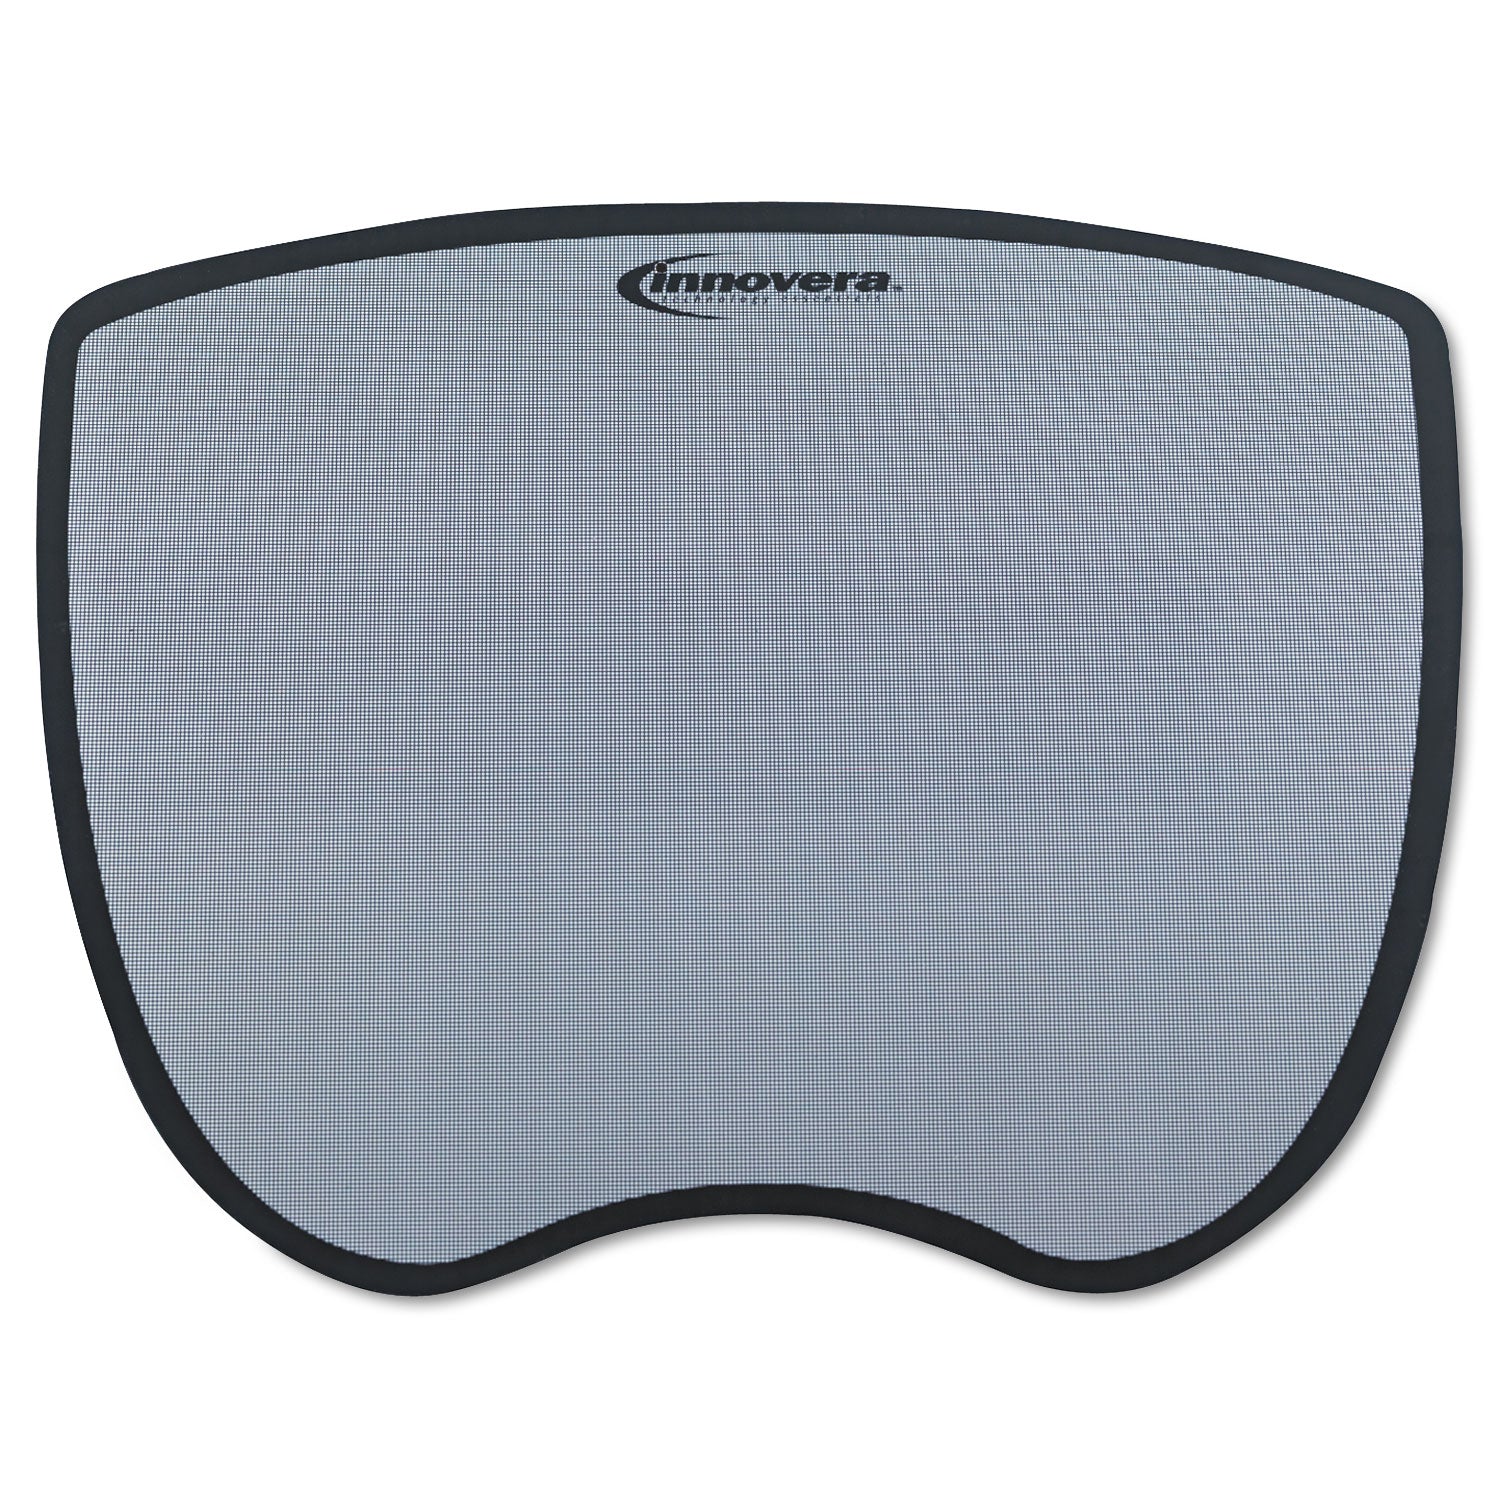 Ultra Slim Mouse Pad, 8.75 x 7, Gray - 